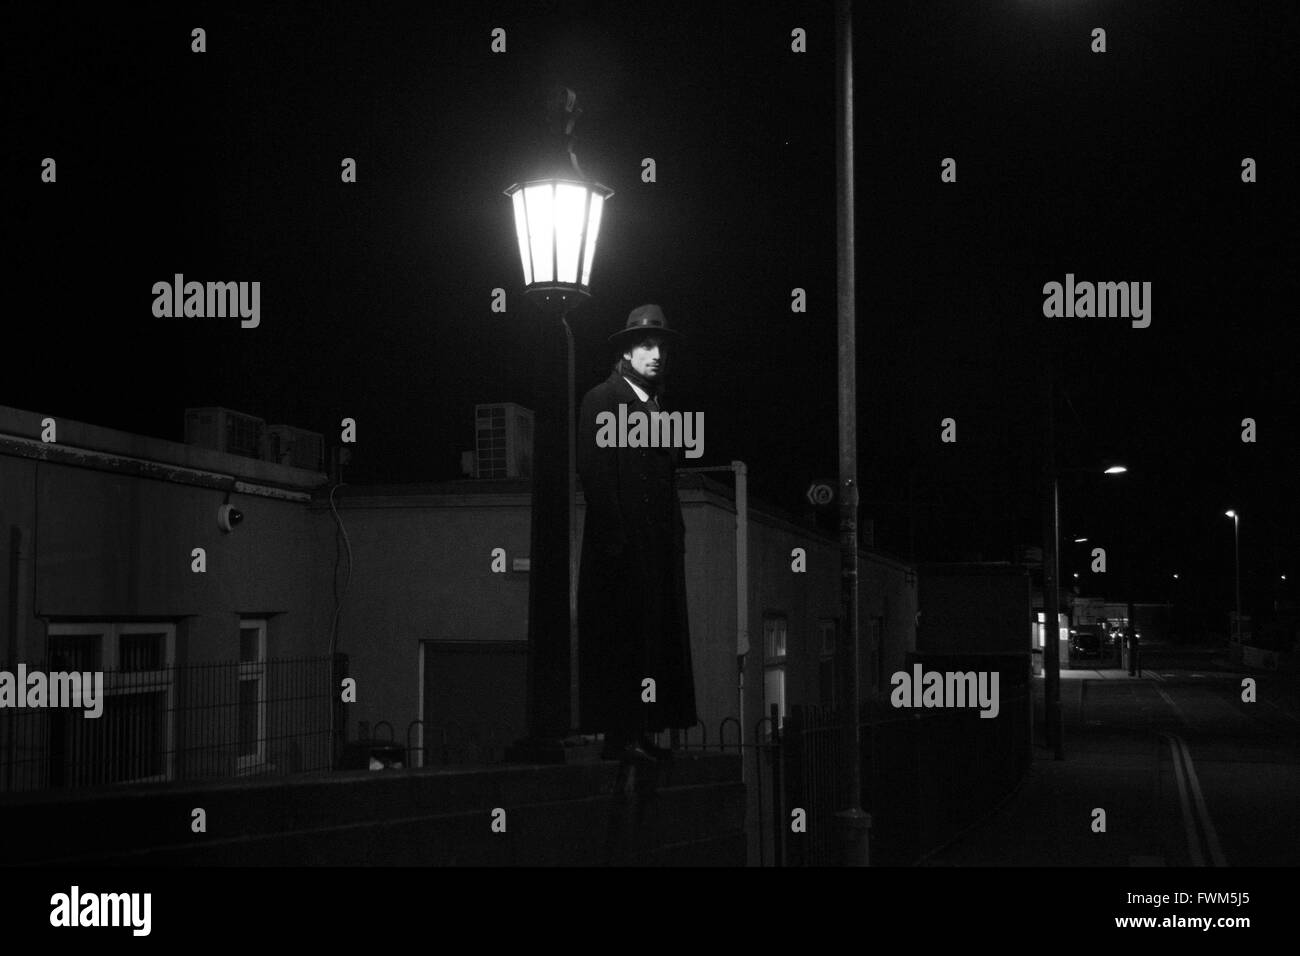 An interpretation of a Film Noir movie called 'The Third Man'. Stock Photo